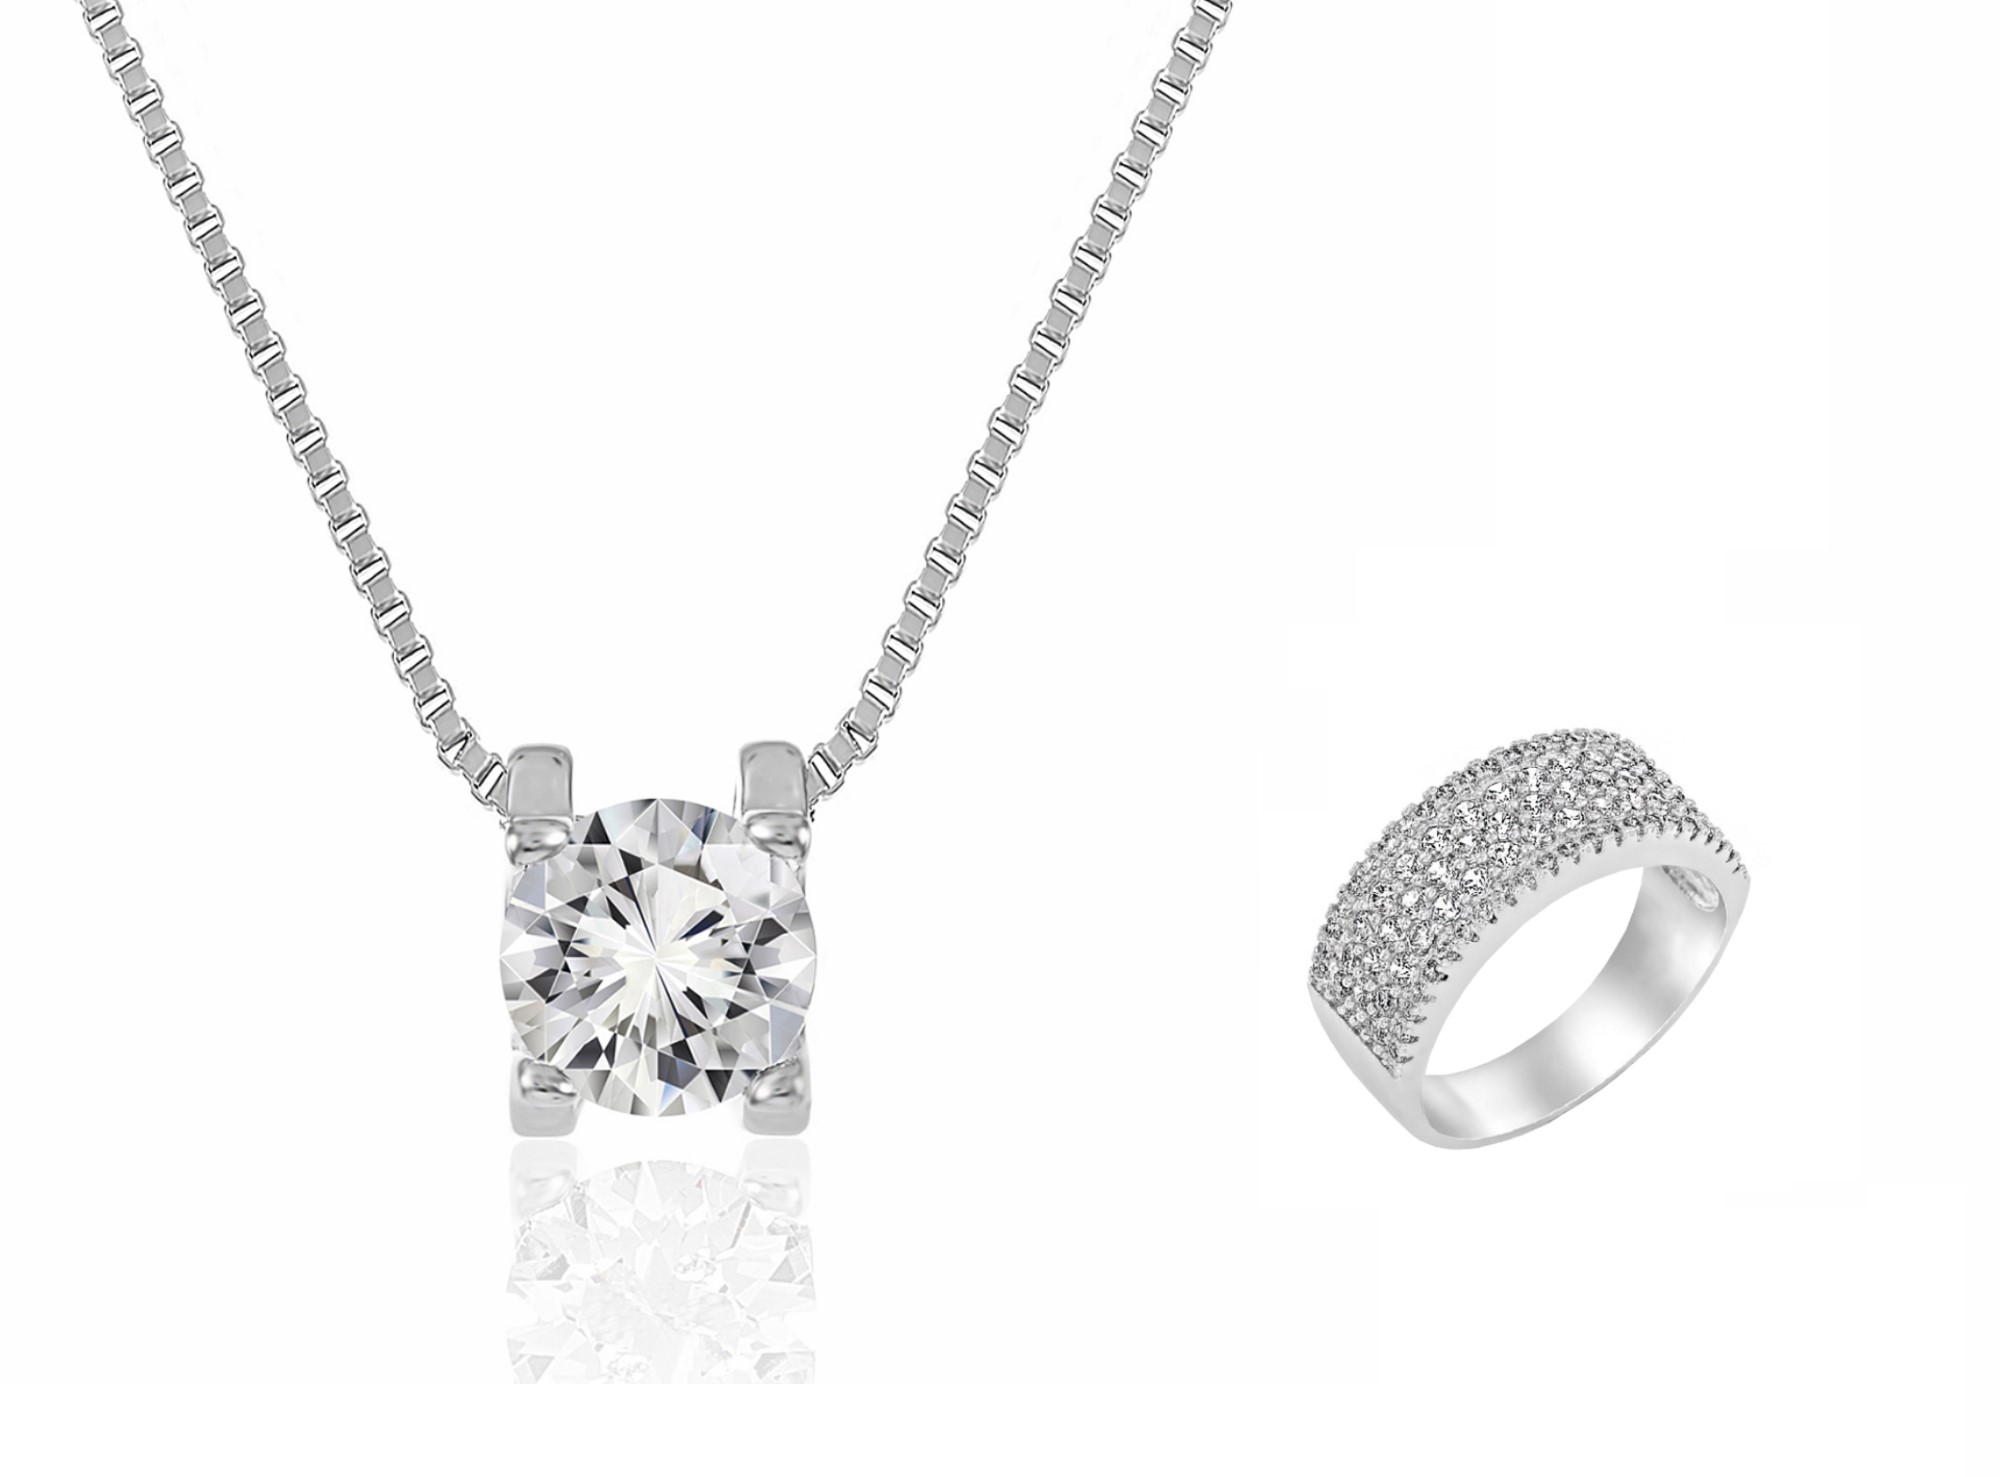 20 pcs - Premium Crystal Pendant and S925 Silver Plated Cubic Zirconia CZ Ring Set - Random Ring Size - Total 10 Sets|GCJ022+GSV021-Random Ring Size|U